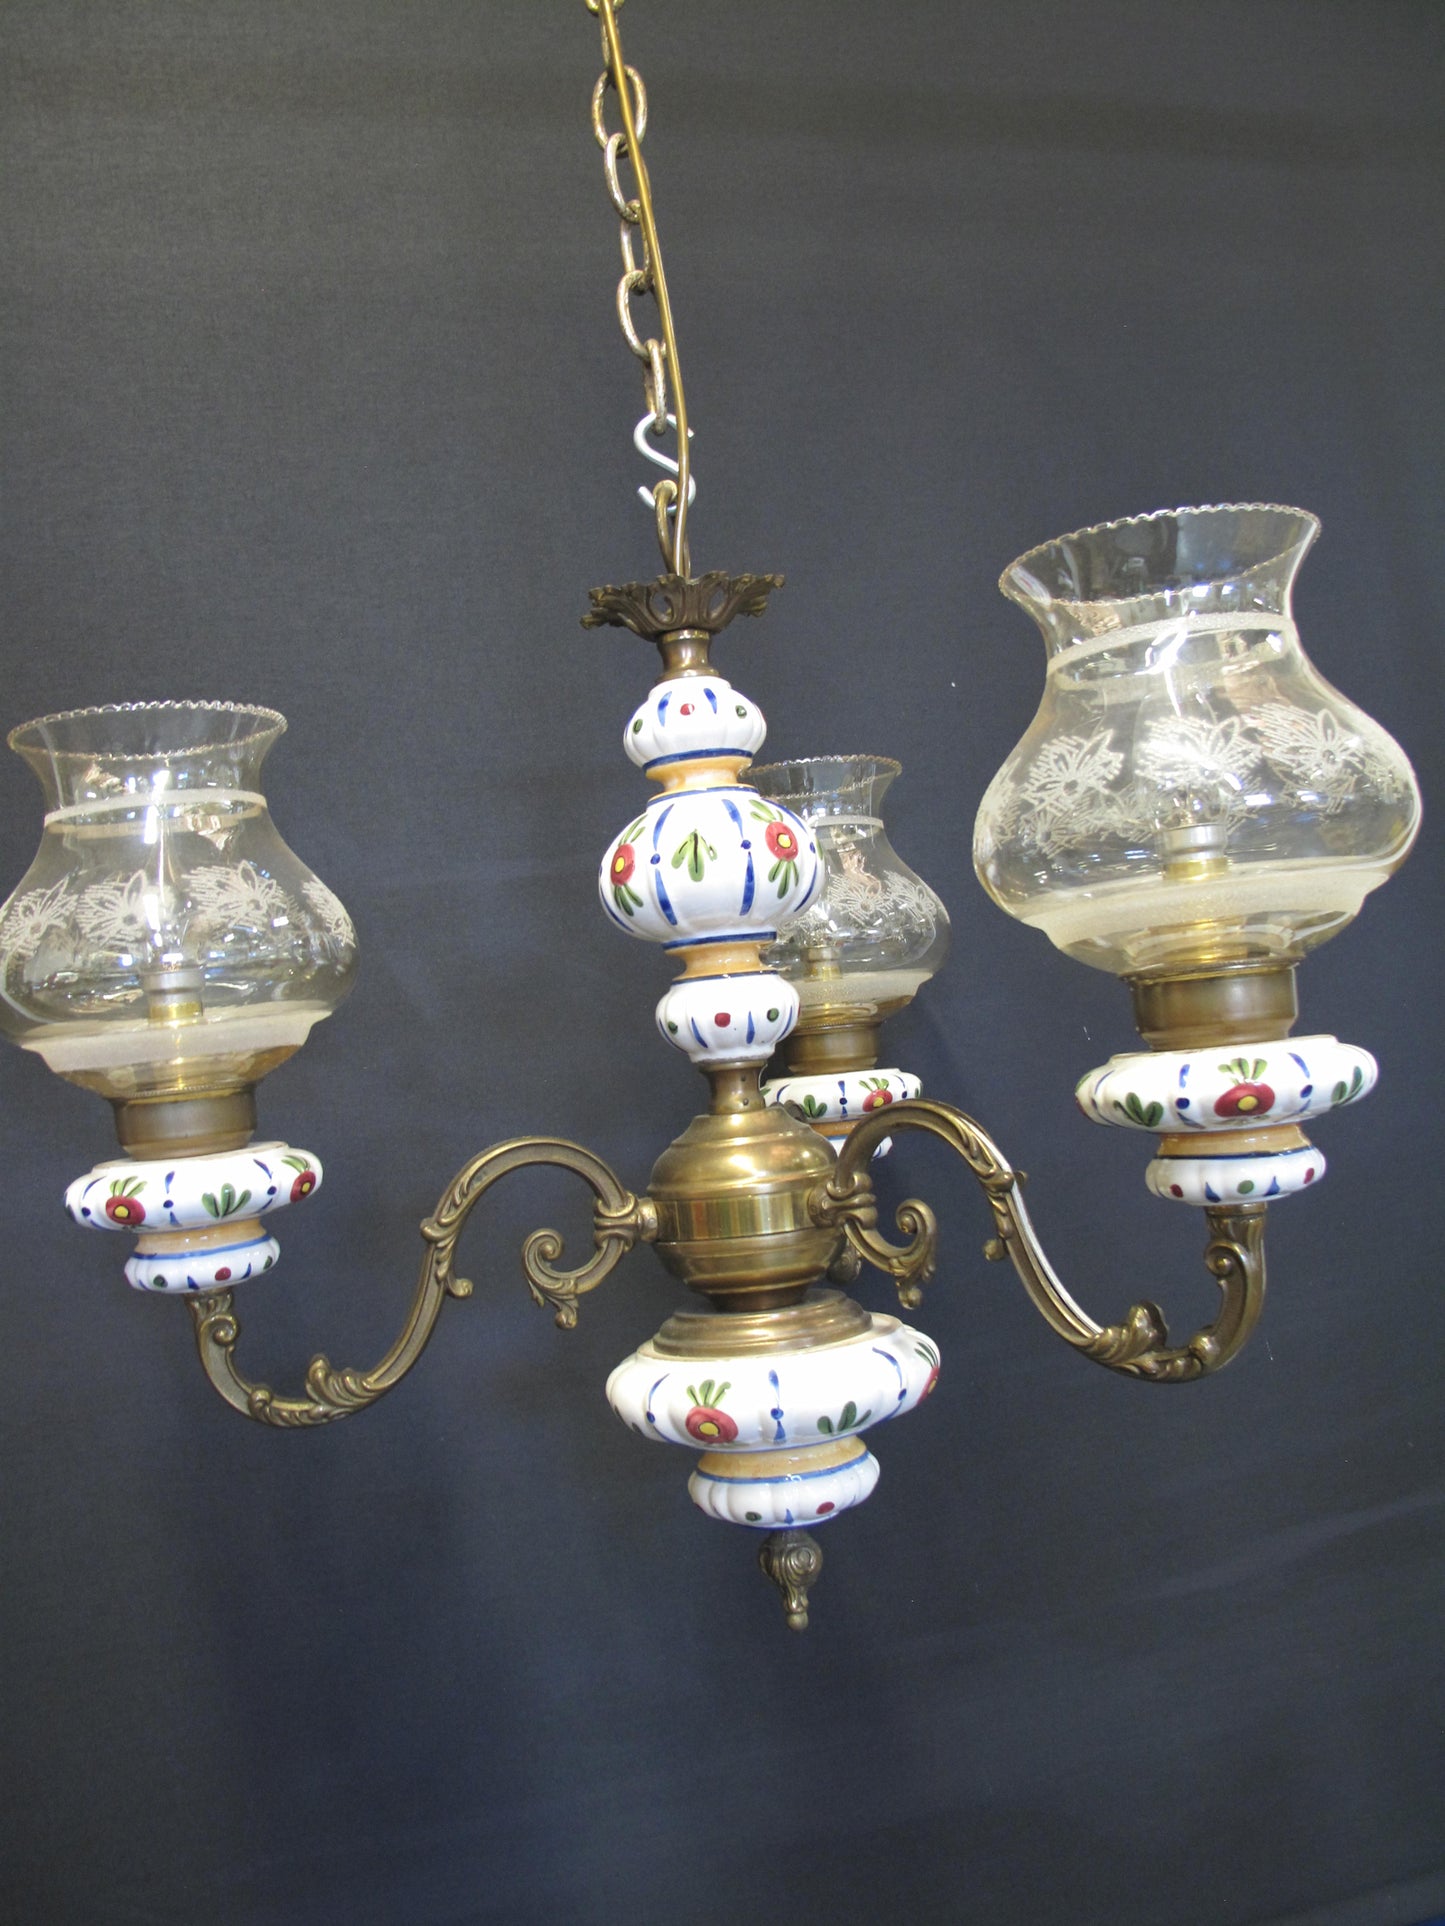 3 Arm brass & ceramic chandelier, angled view